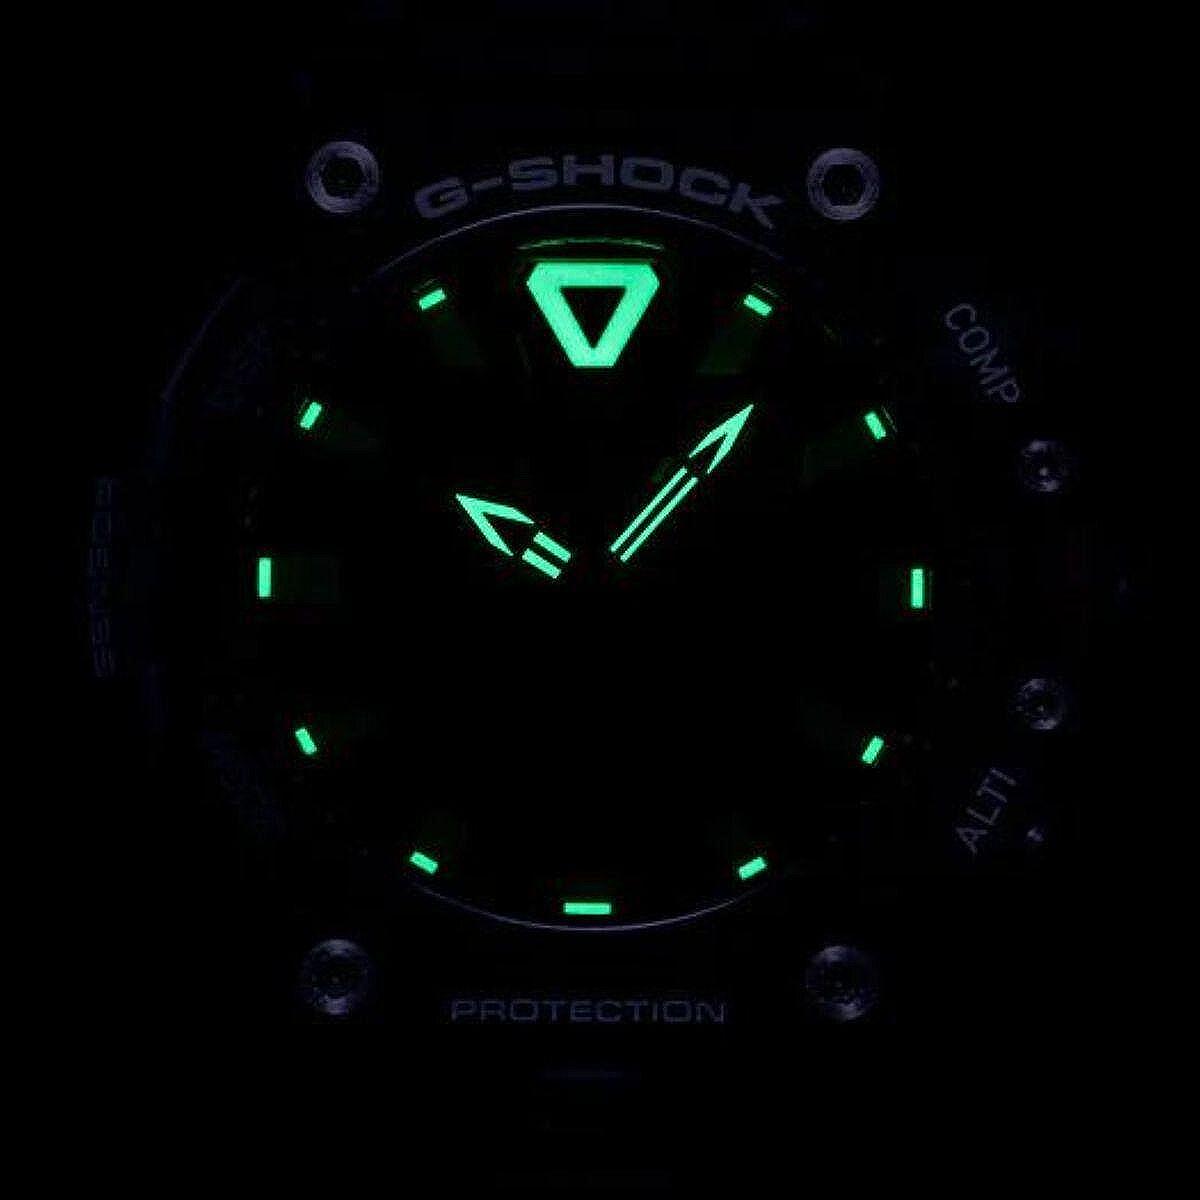 Часовник Casio G-SHOCK GRAVITYMASTER - GR-B100-1A2ER-Copy